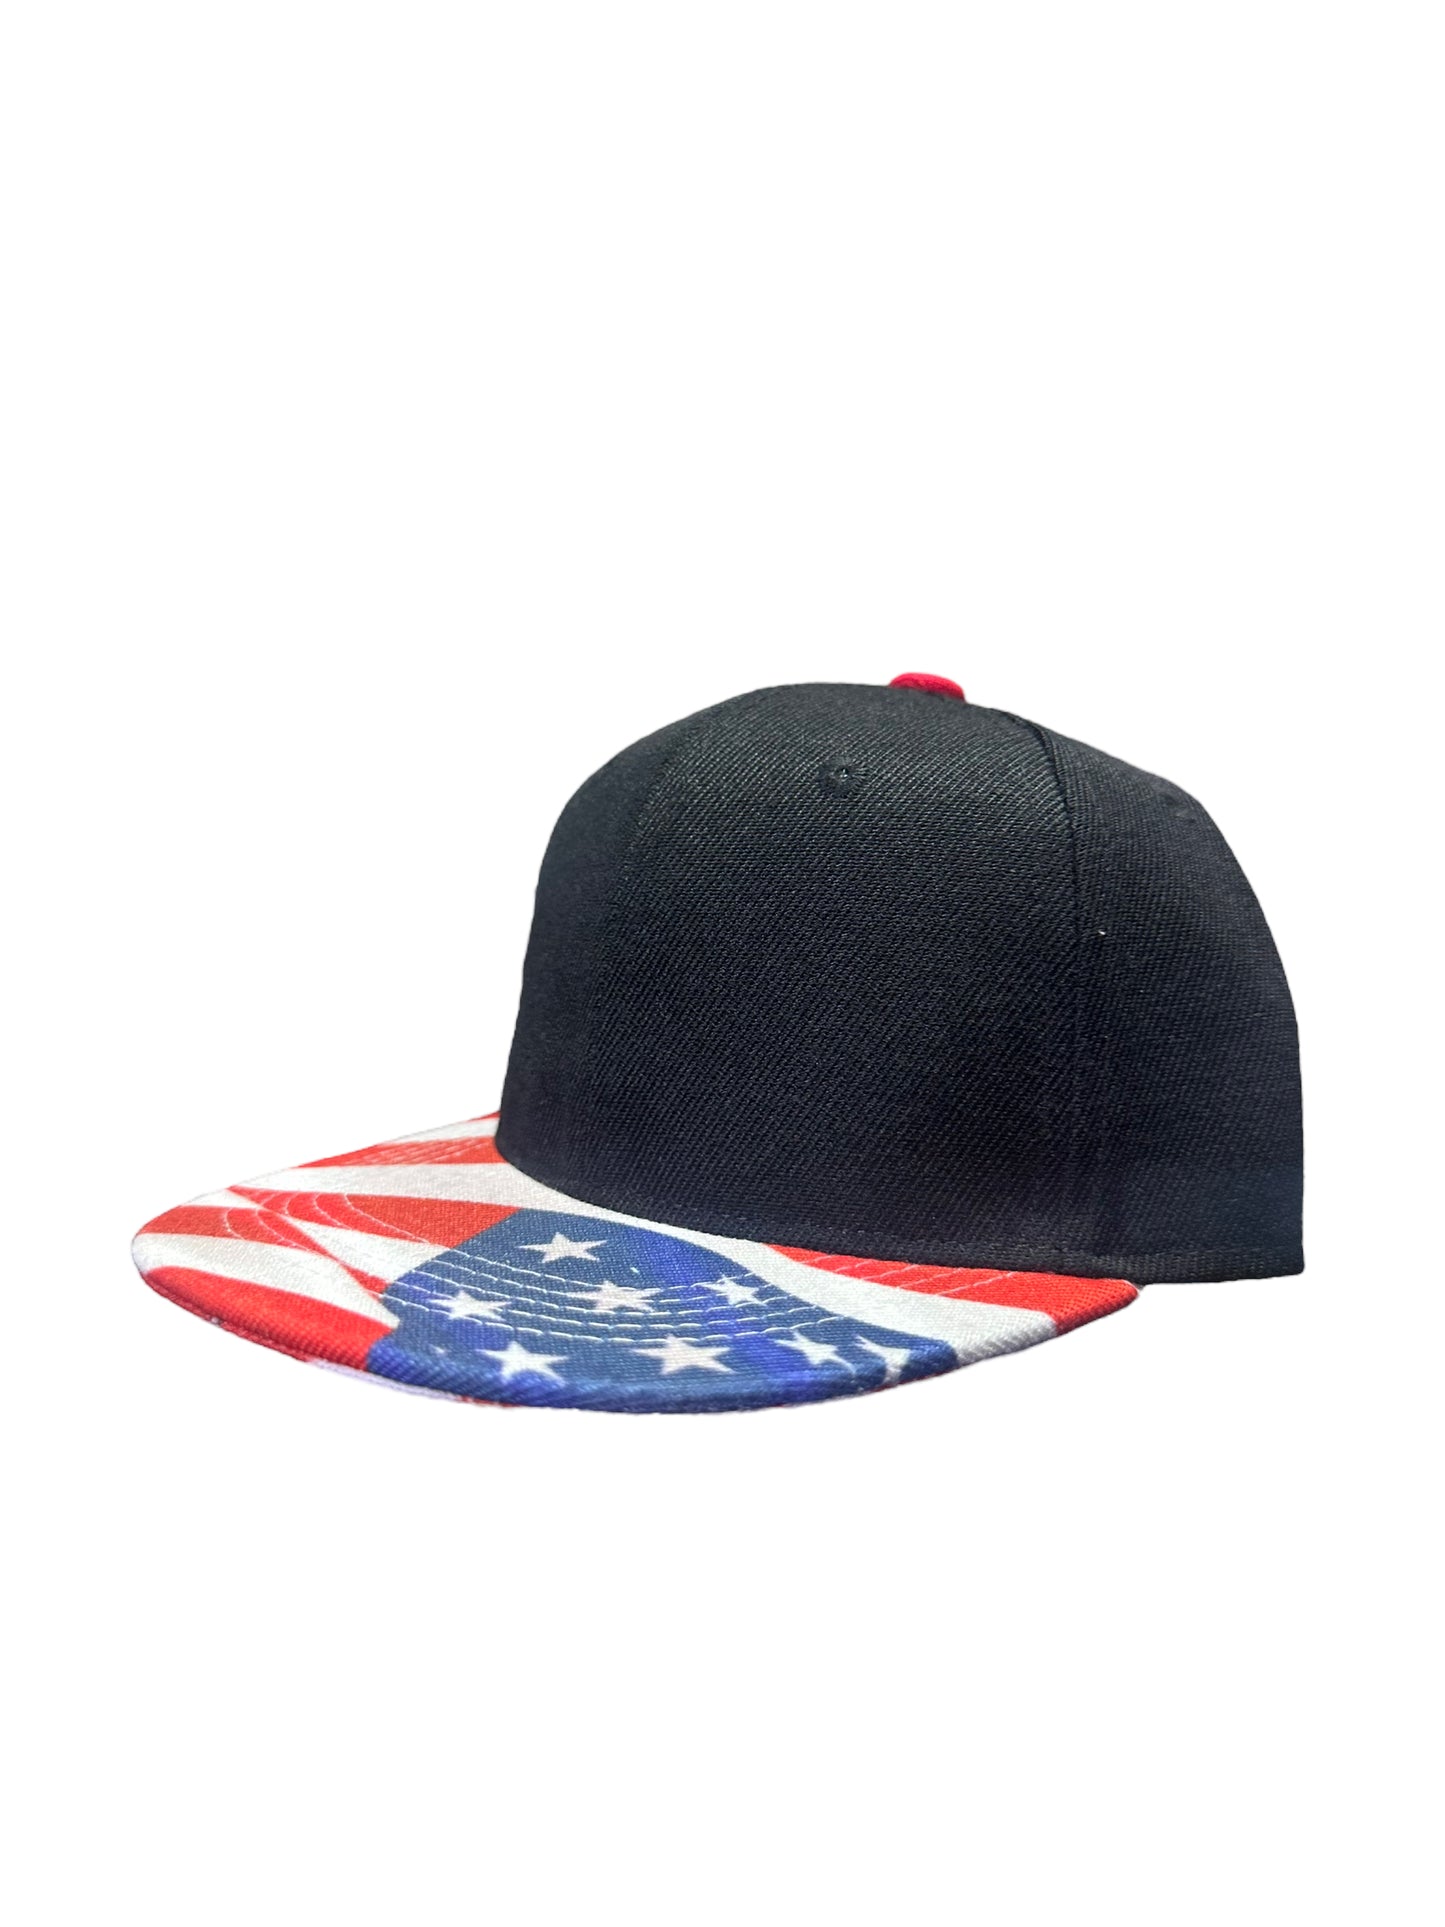 Baby hats-USA flag bill black crown SnapBack